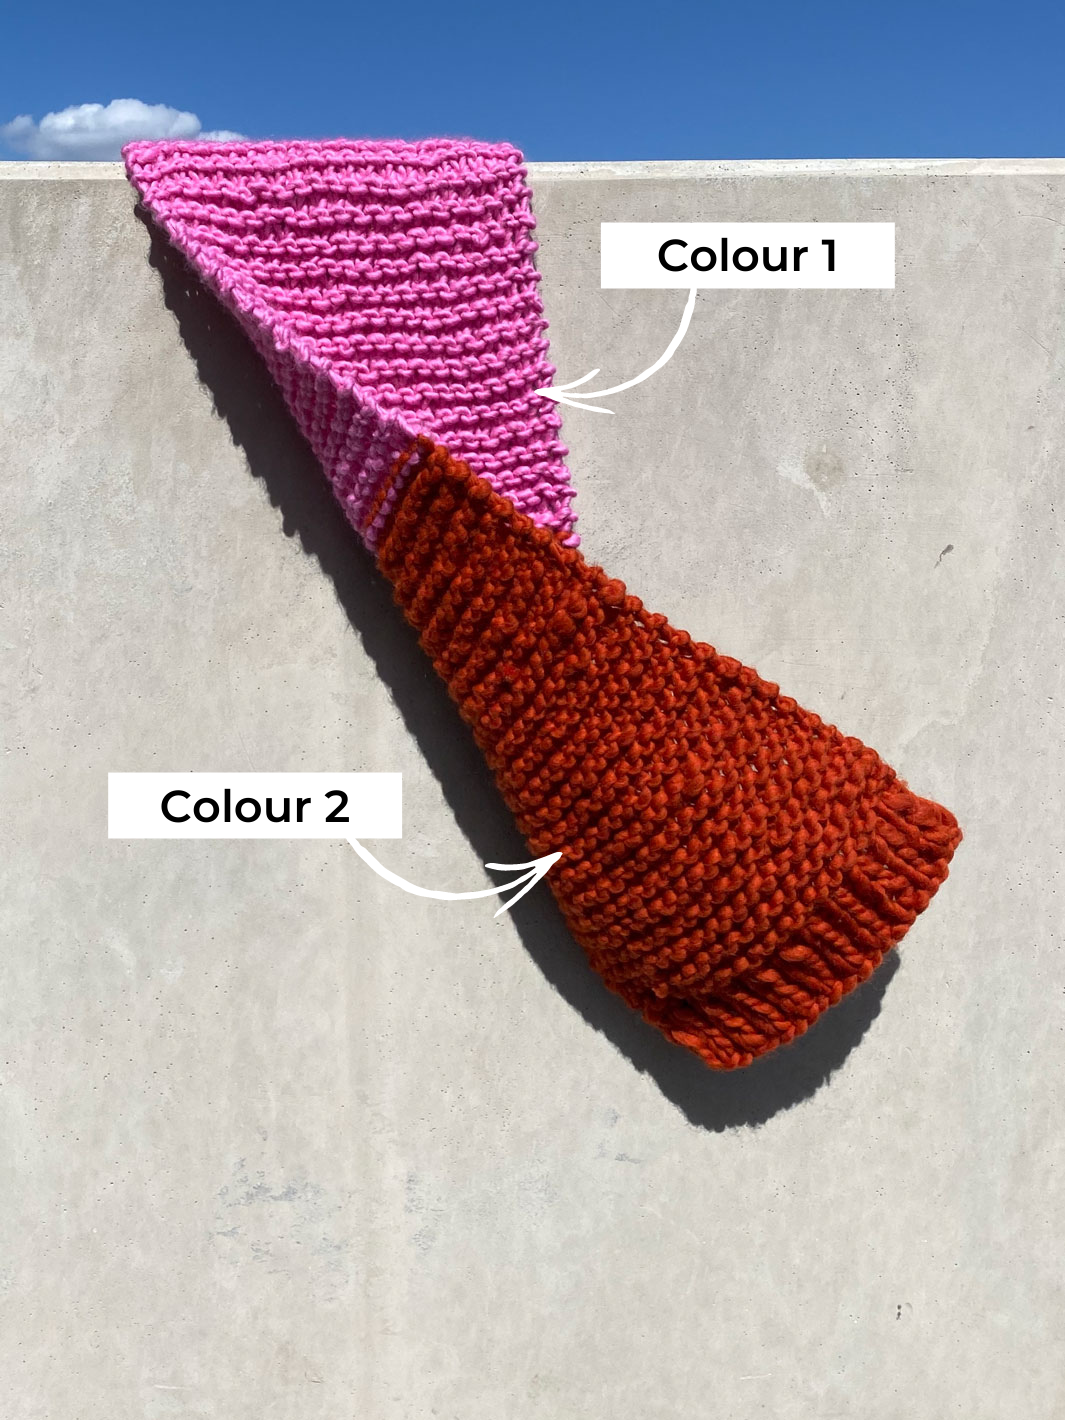 Colour indicator of kane knit kit